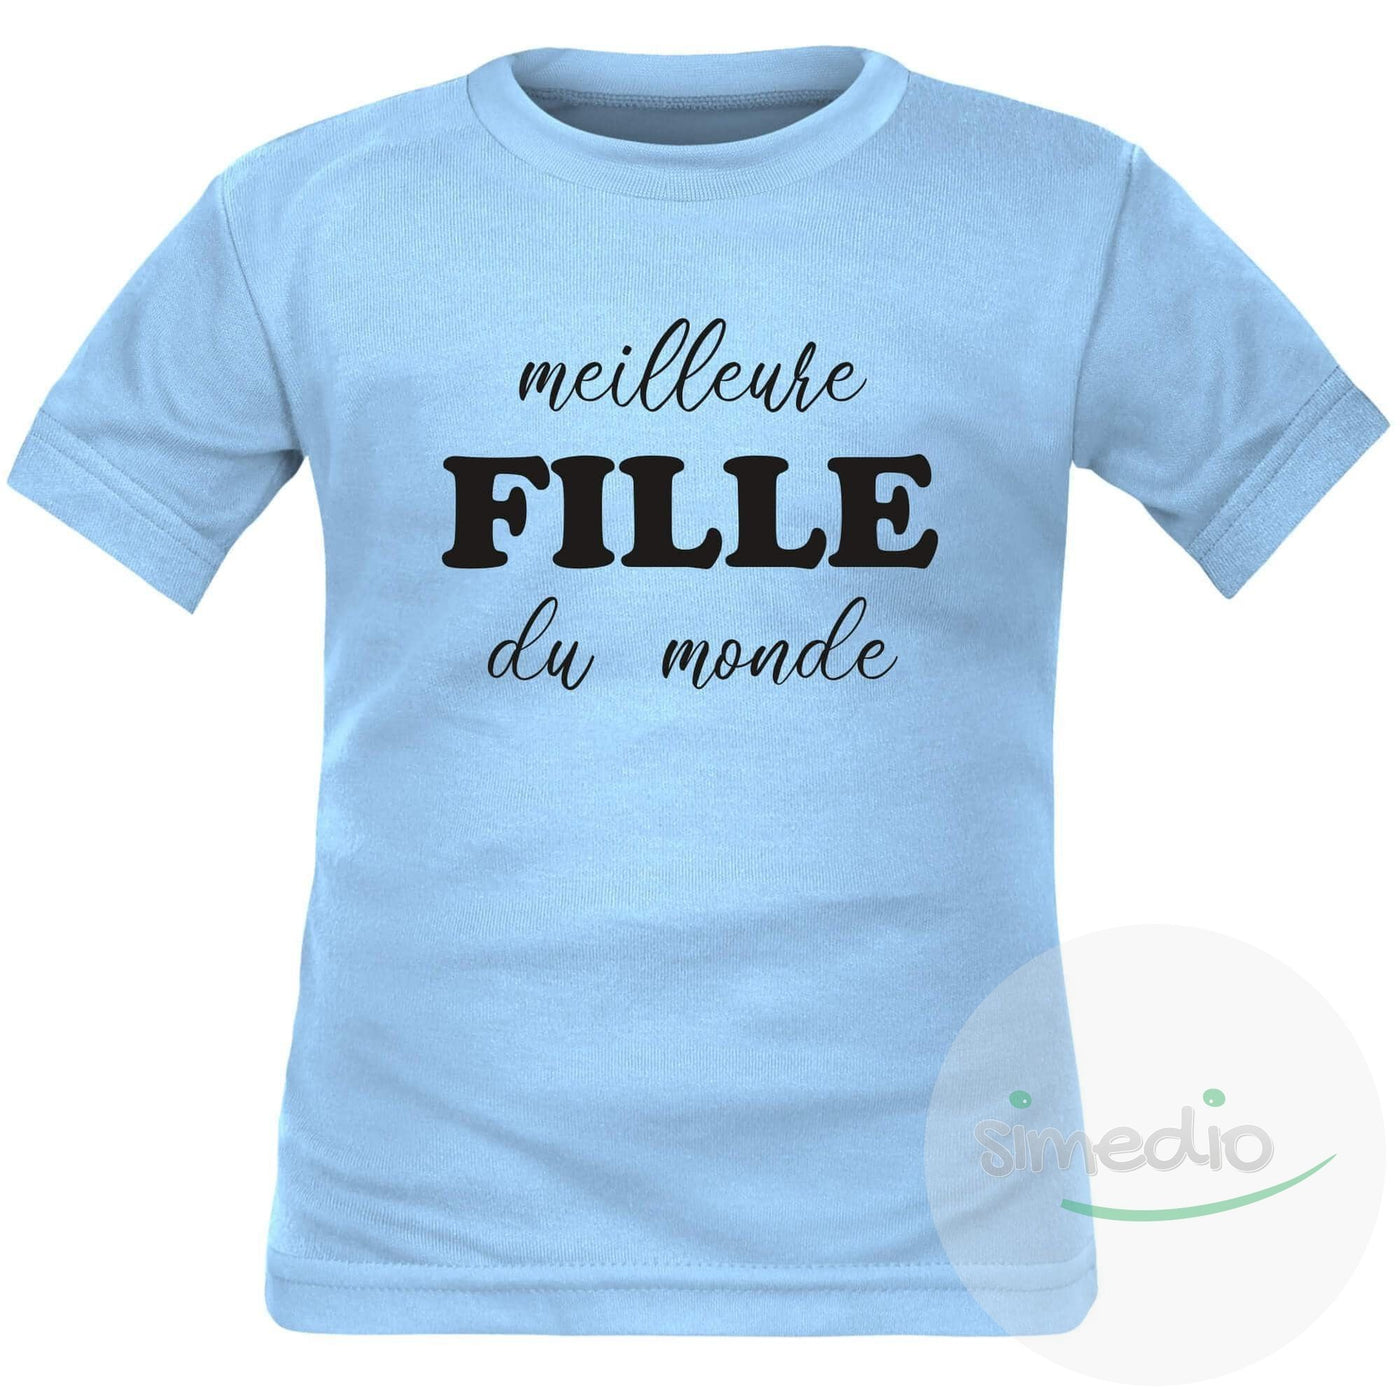 Tee shirt enfant original : meilleure FILLE du monde, Bleu, 2 ans, Courtes - SiMEDIO